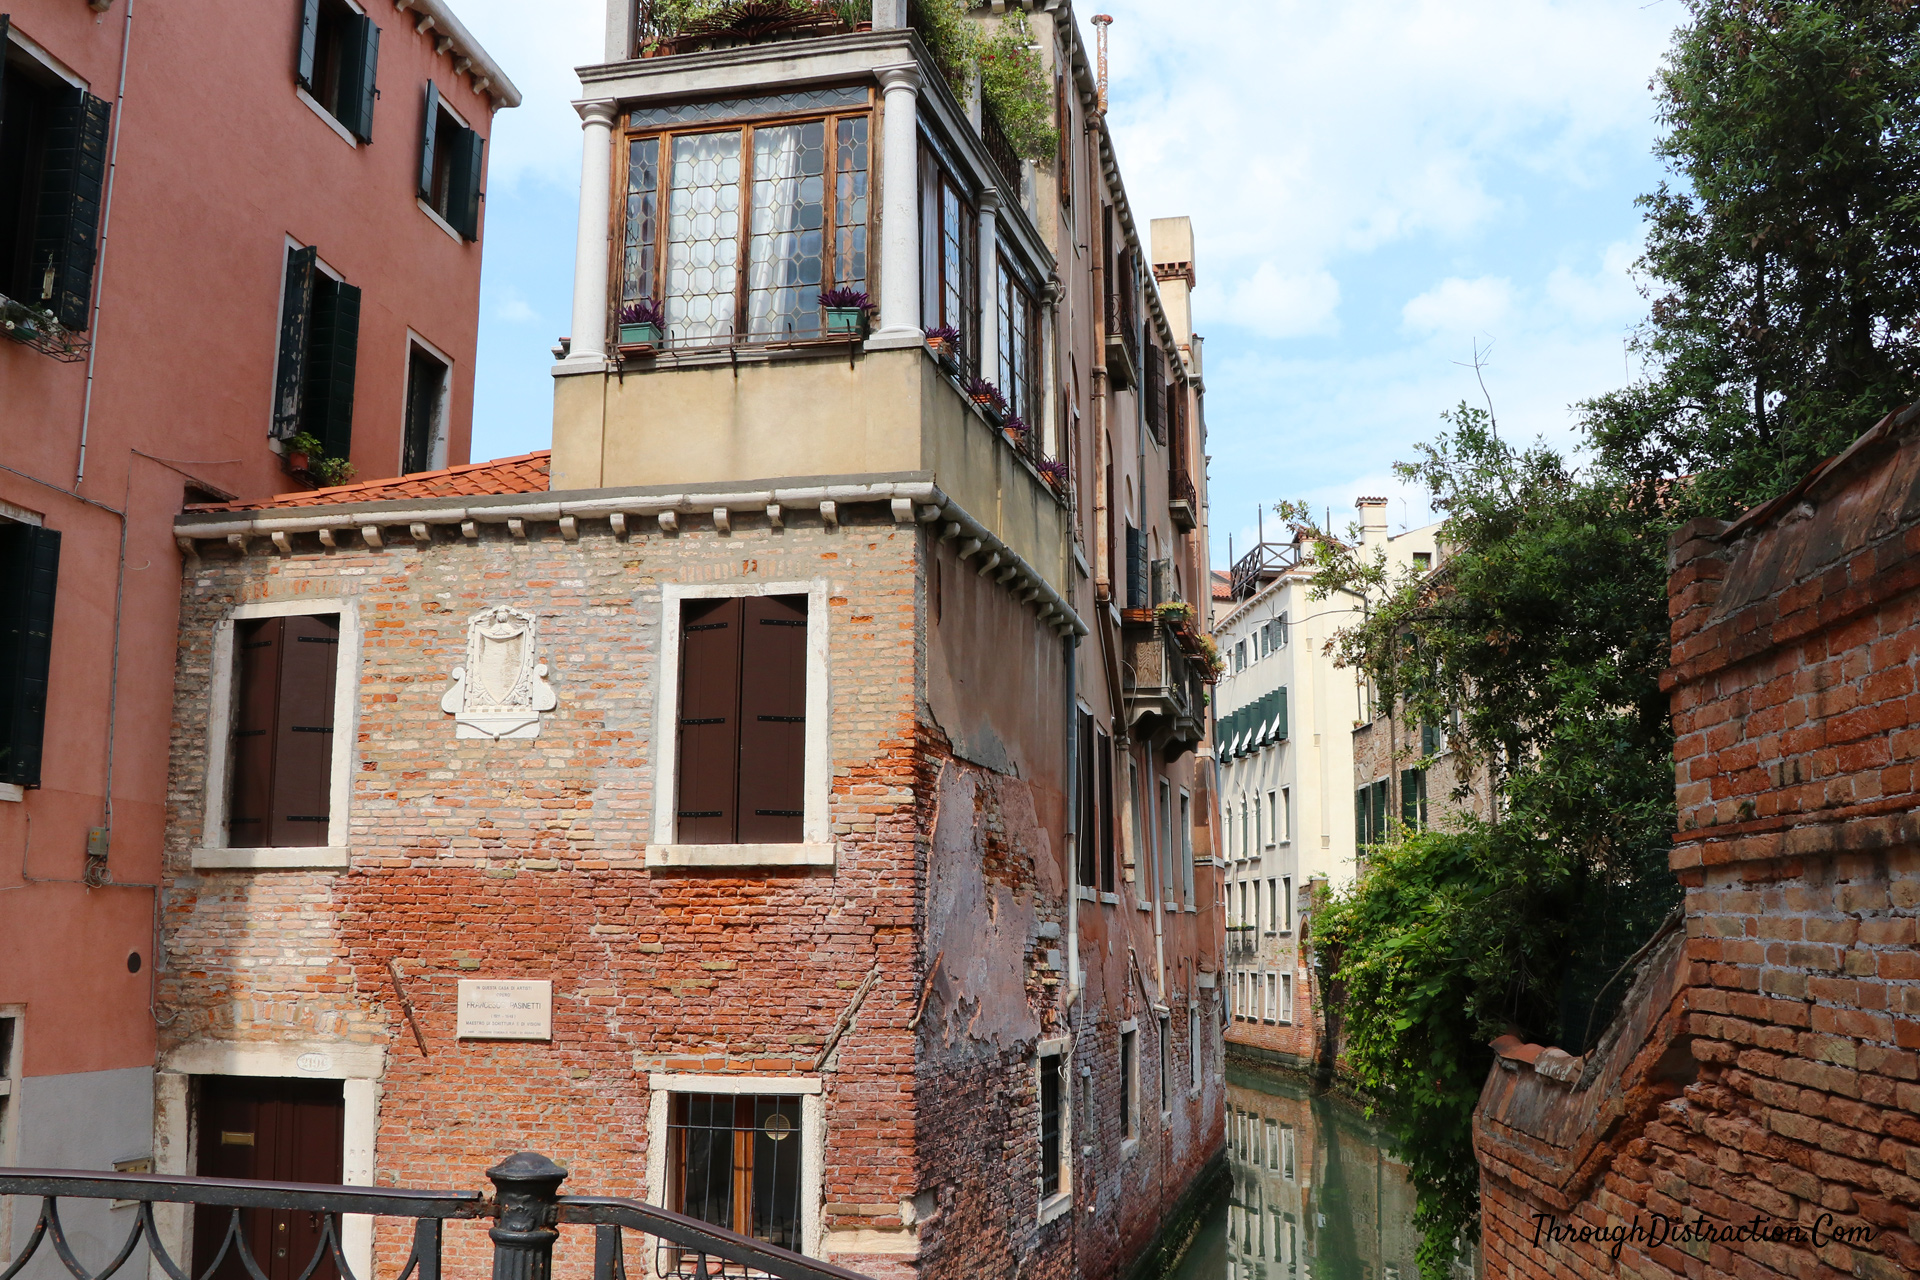 24 hours in Venice – An Alternate Plan.